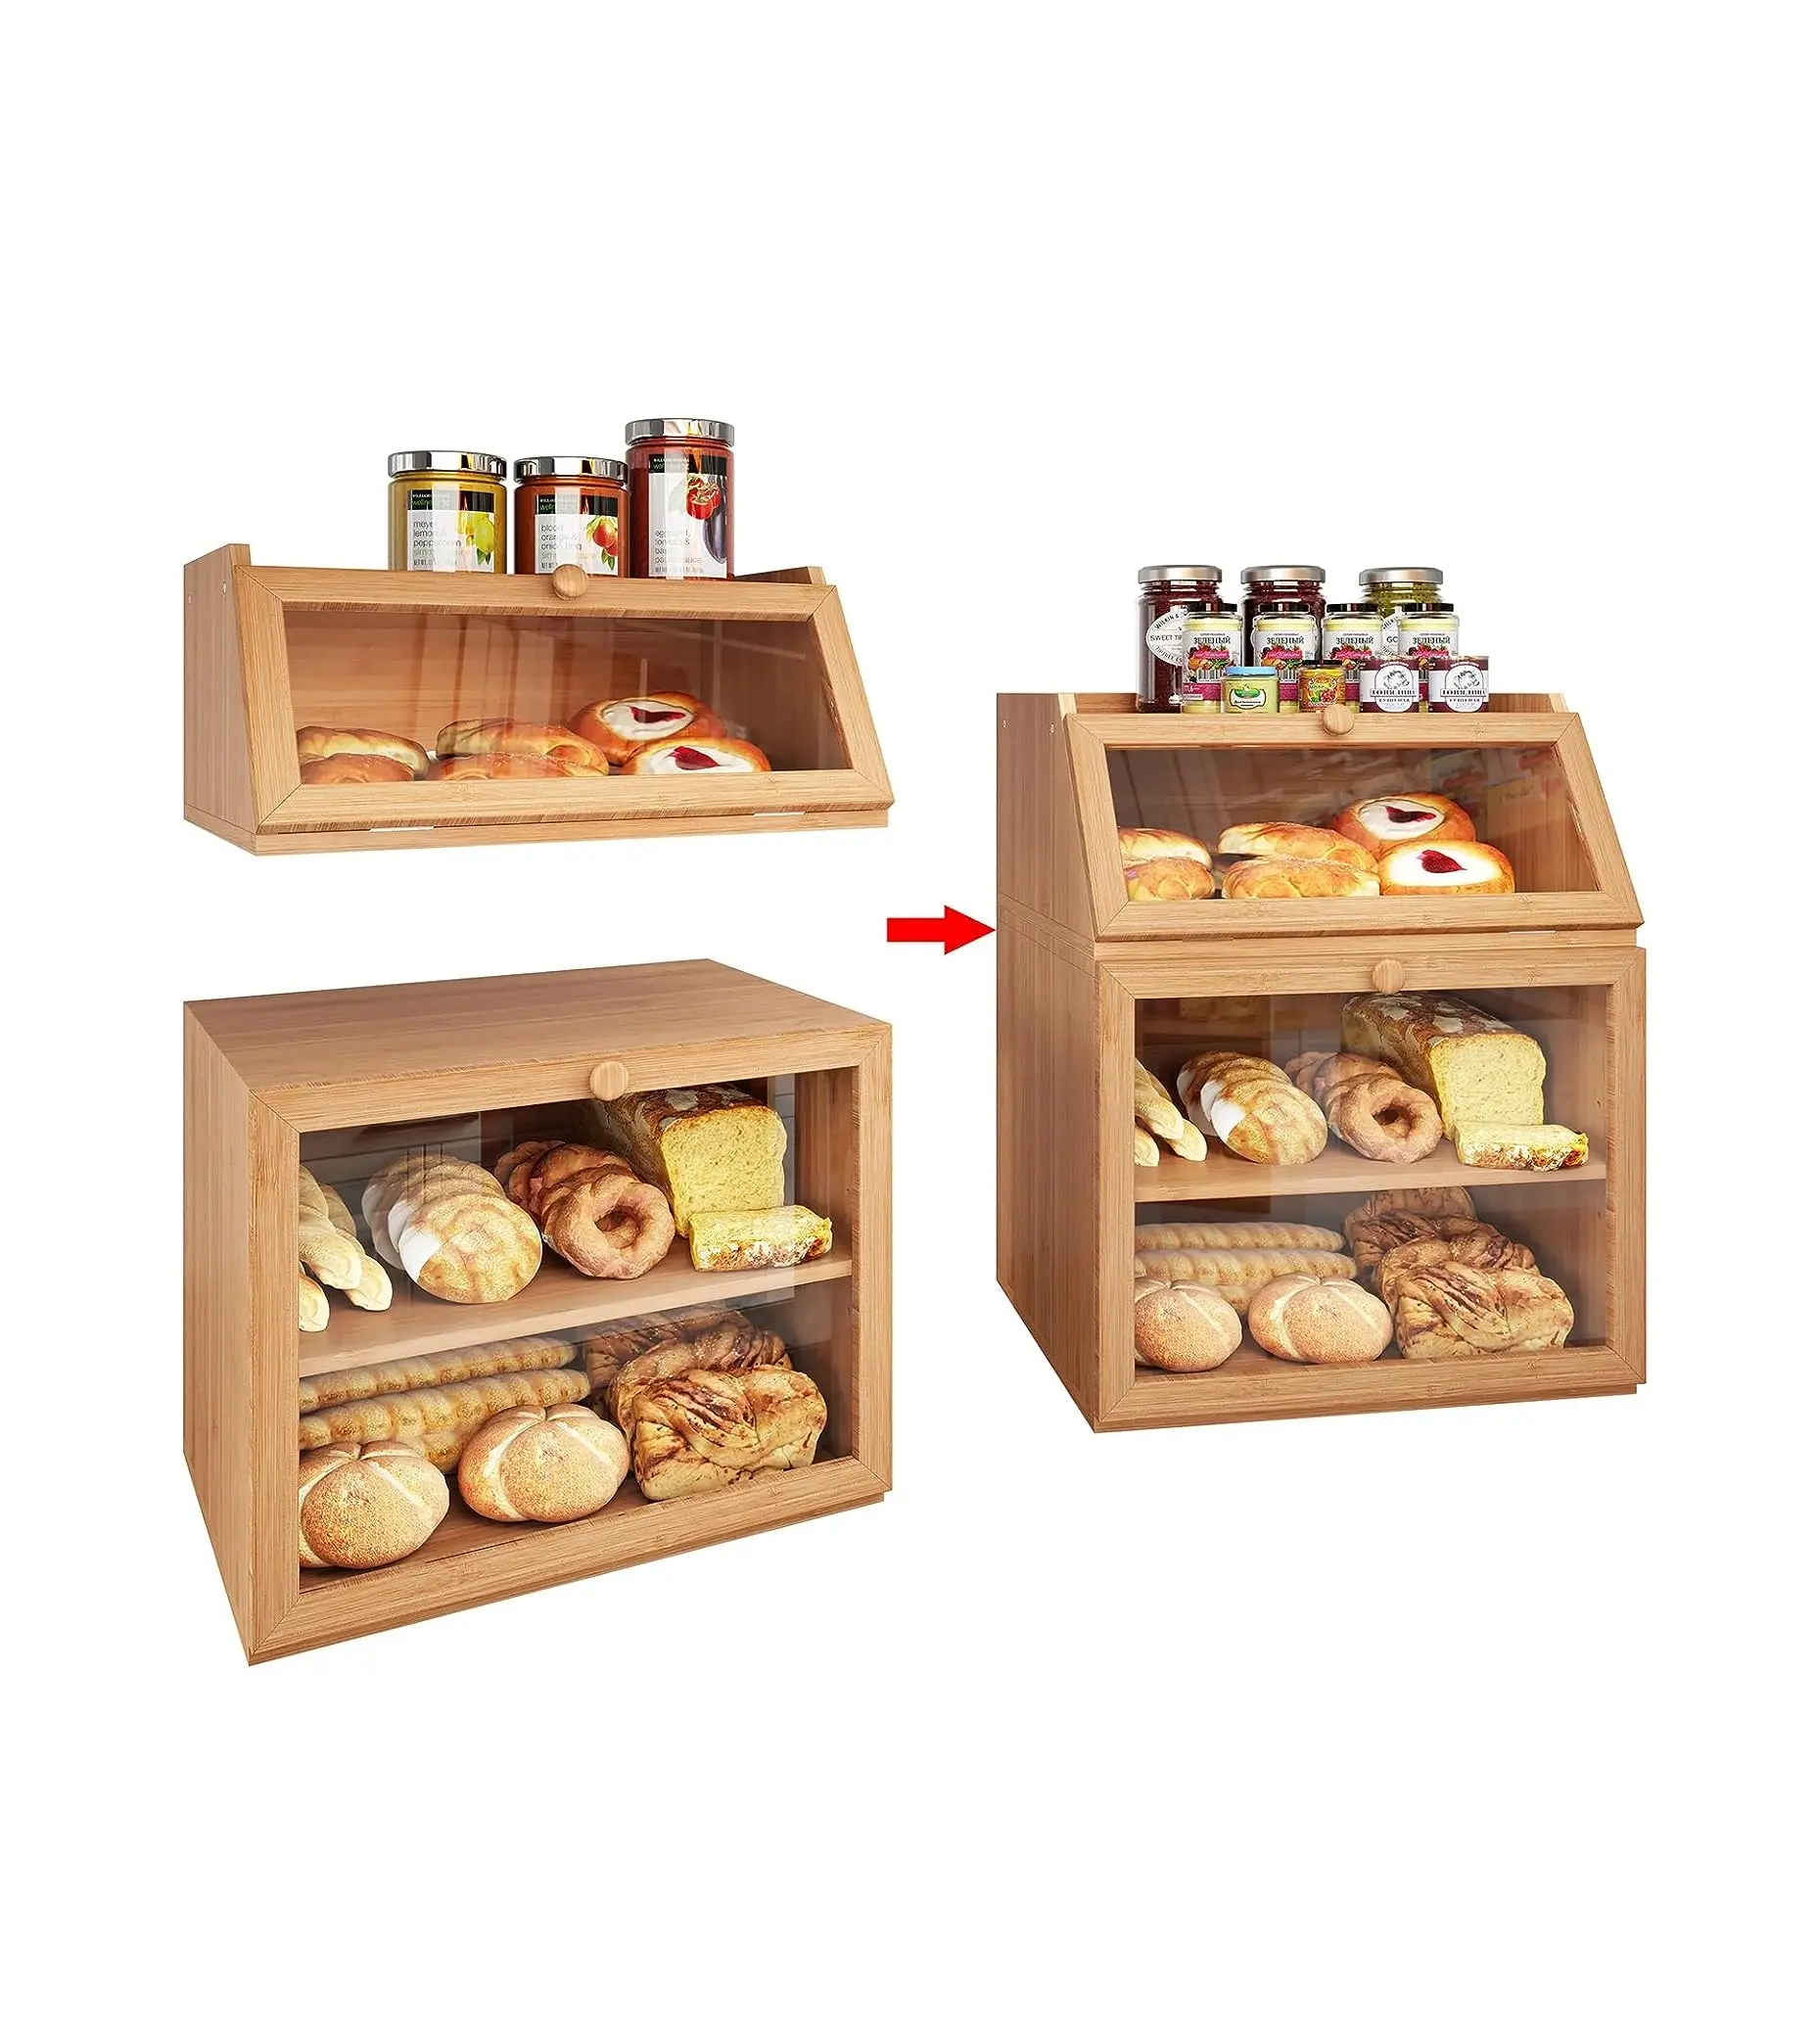 रसोई काउंटरटॉप प्राकृतिक के साथ बड़े डबल विभाजक बांस ब्रेड बॉक्स भंडारण और रसोई काउंटरटॉप प्राकृतिक के लिए समायोज्य डिब्बे